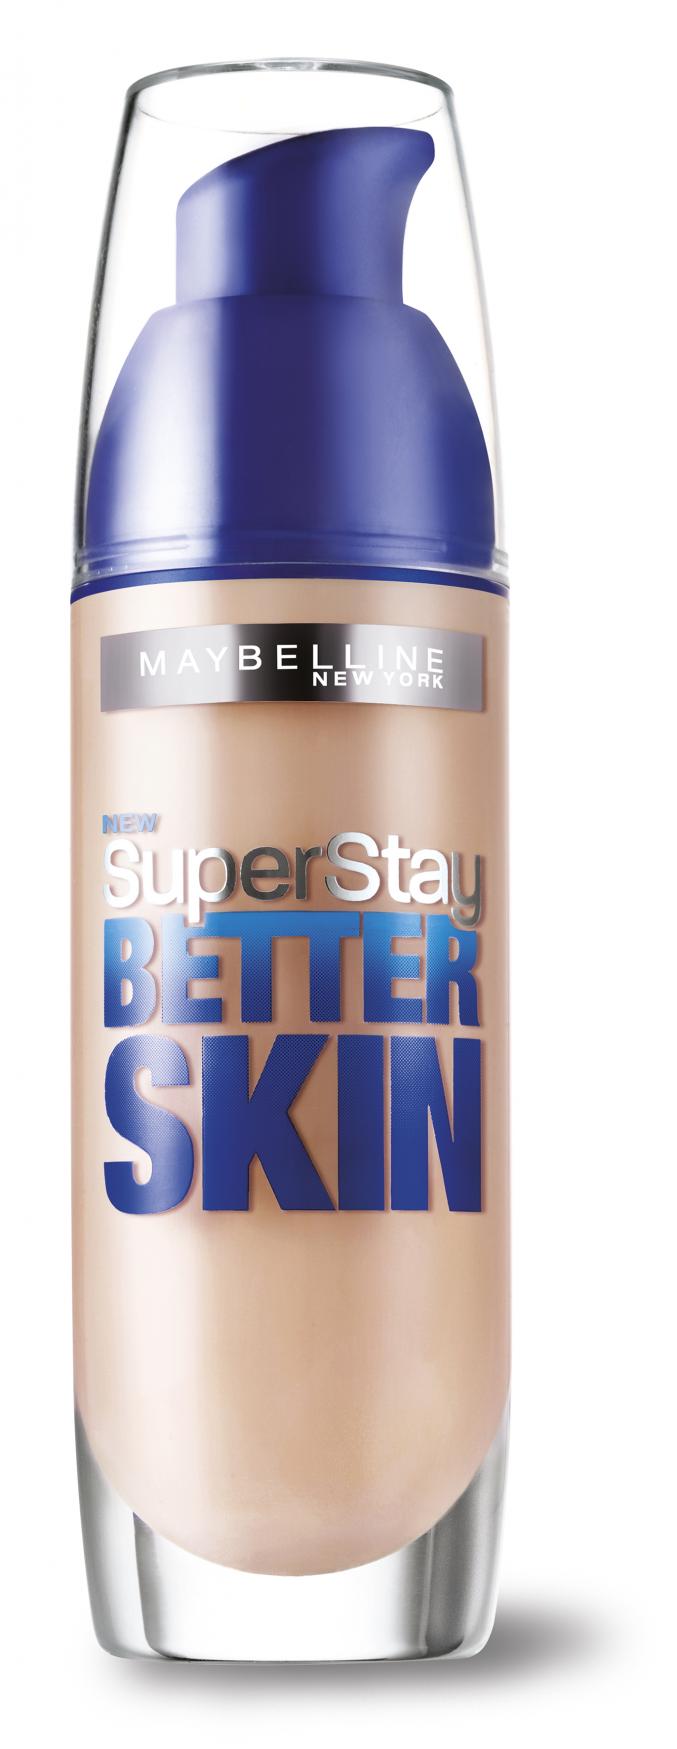 SuperStay Better Skin (Maybelline New York)